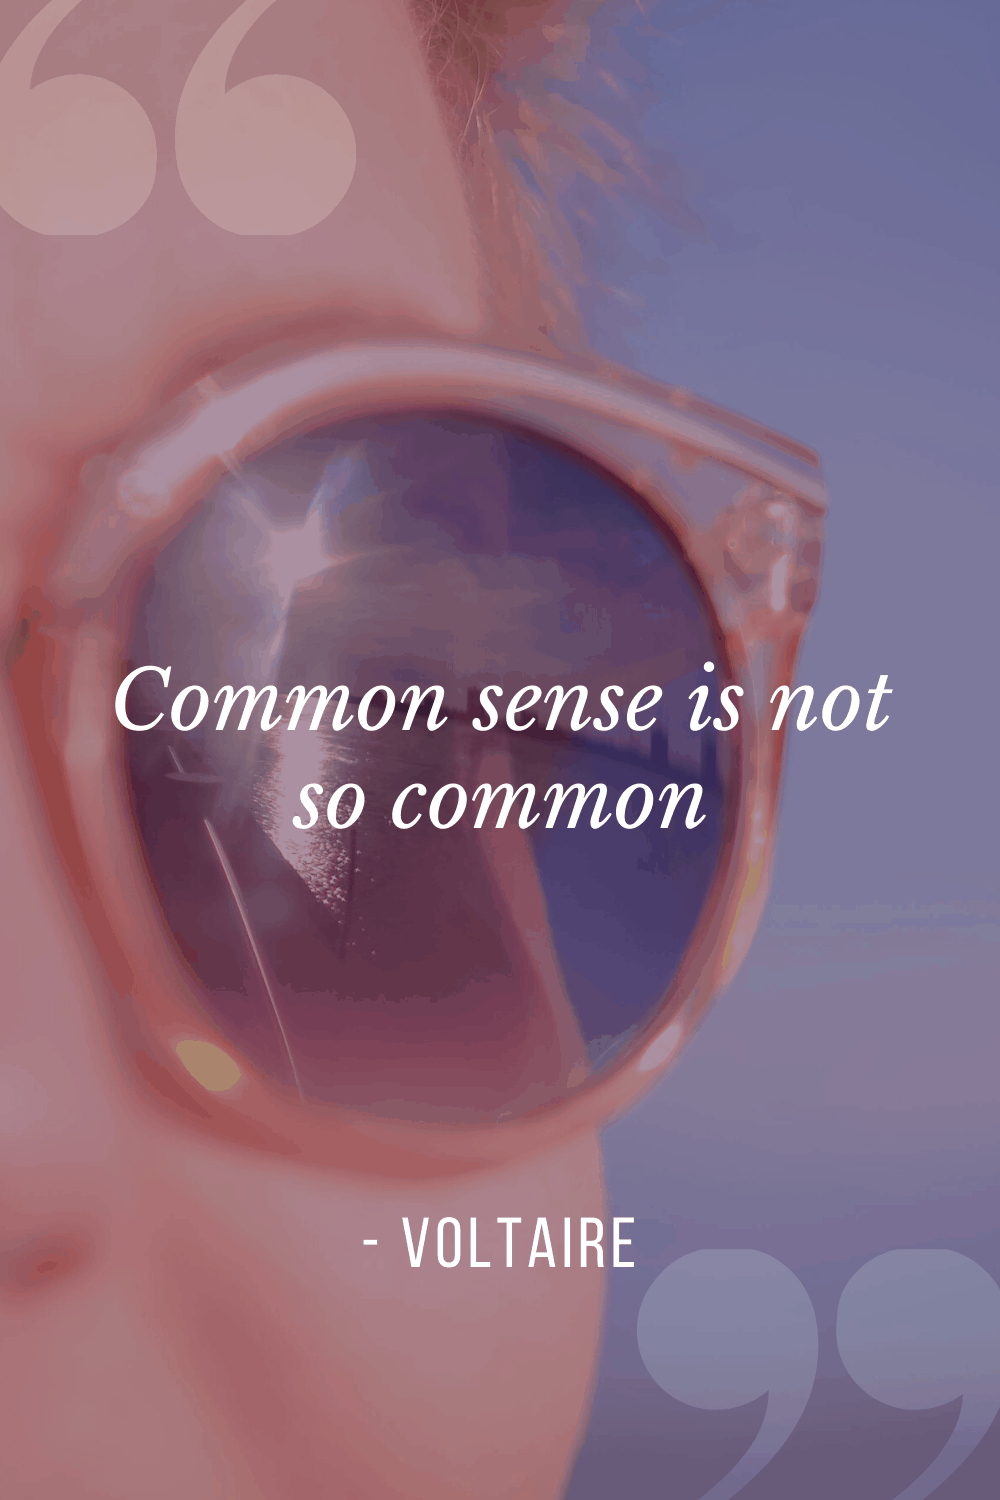 “Common sense is not so common”, Voltaire